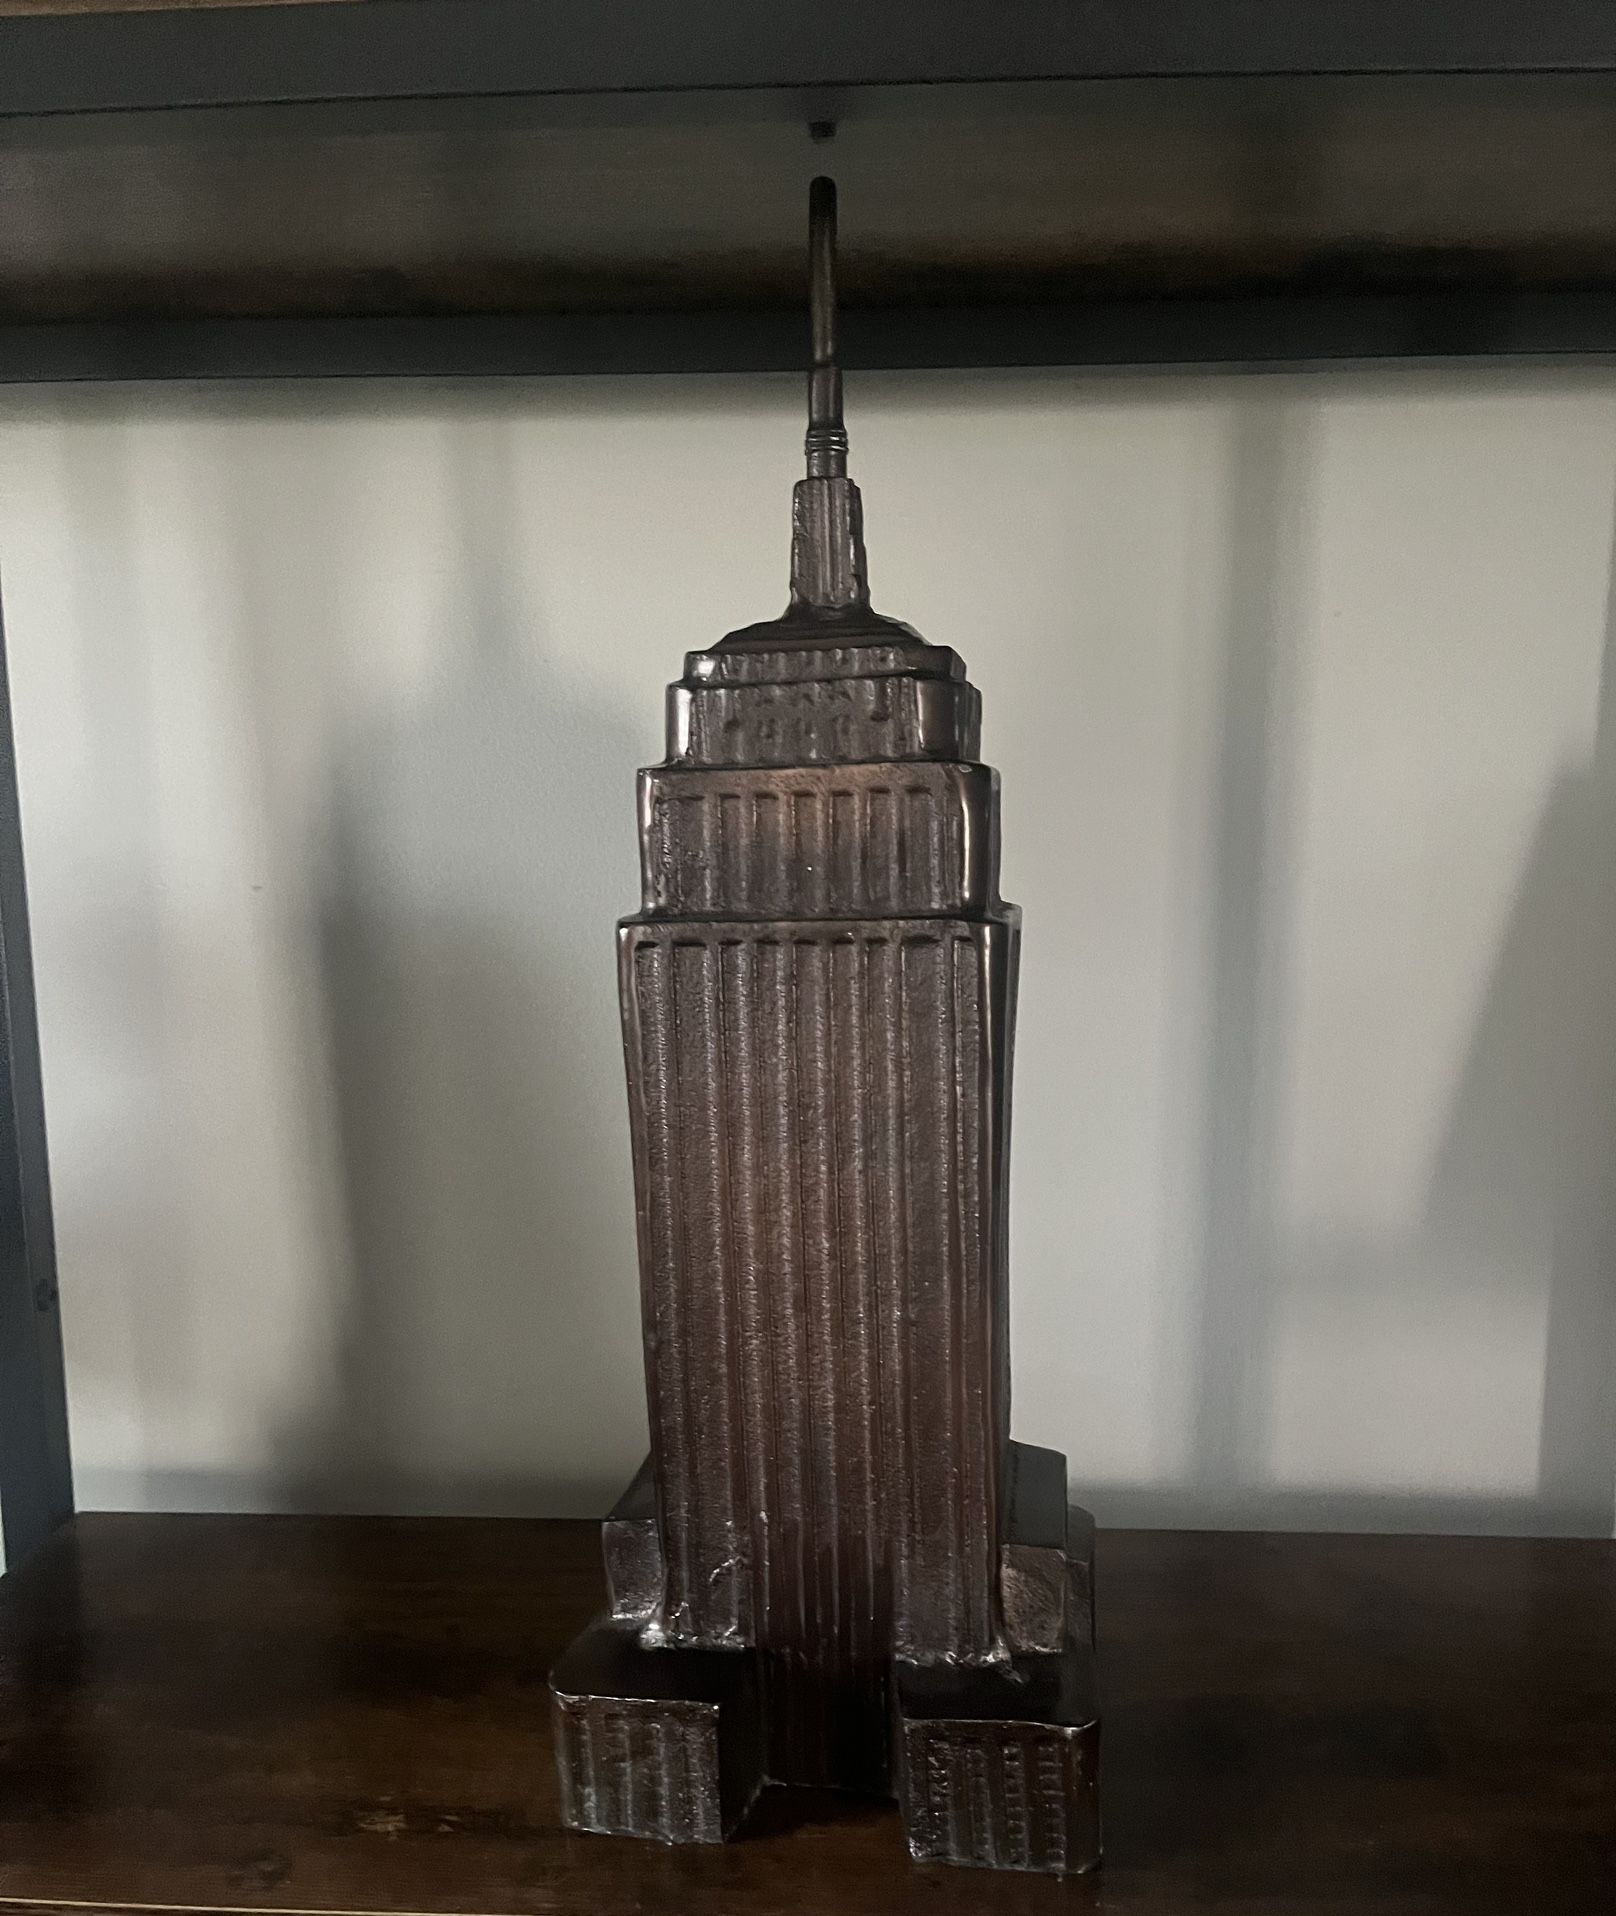 Empire State Building Statue